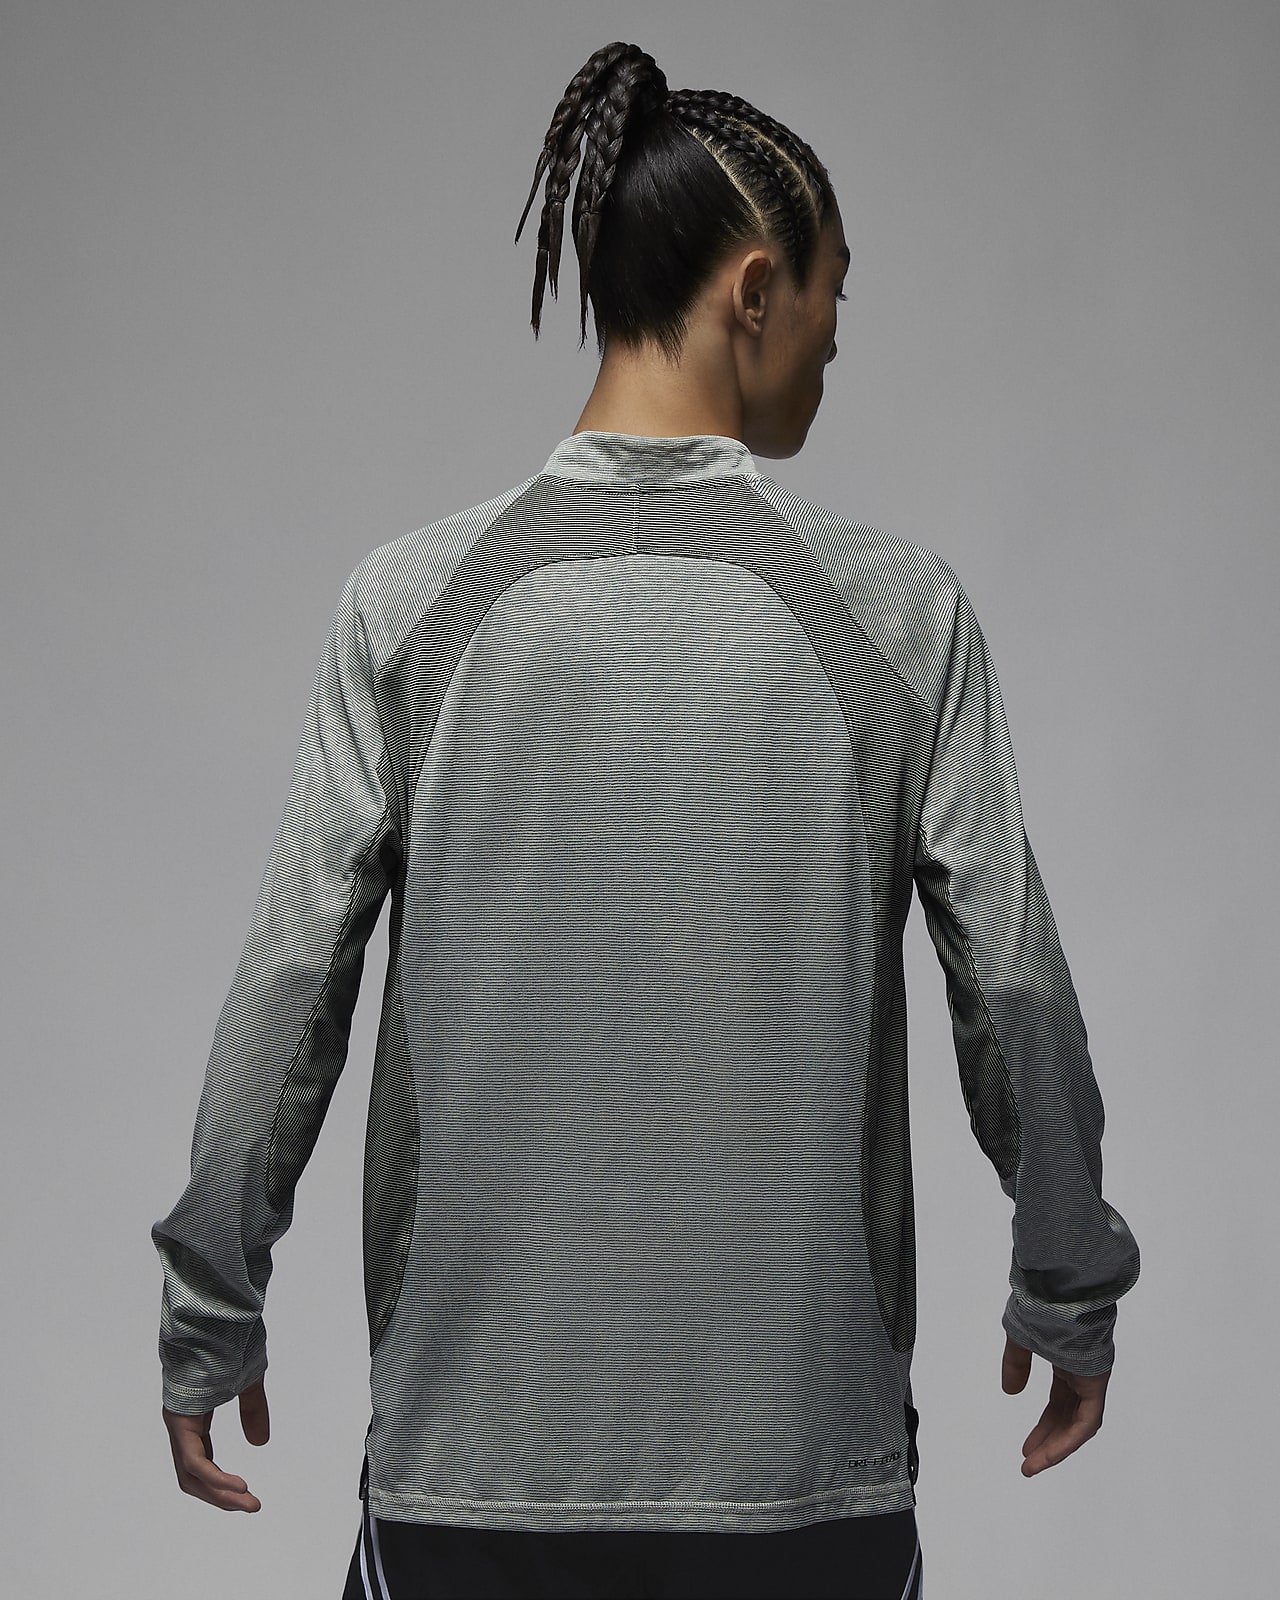 NIKE Jordan Brand Dri-Fit Men's Long-Sleeve Compression Shirt XS Small Gray